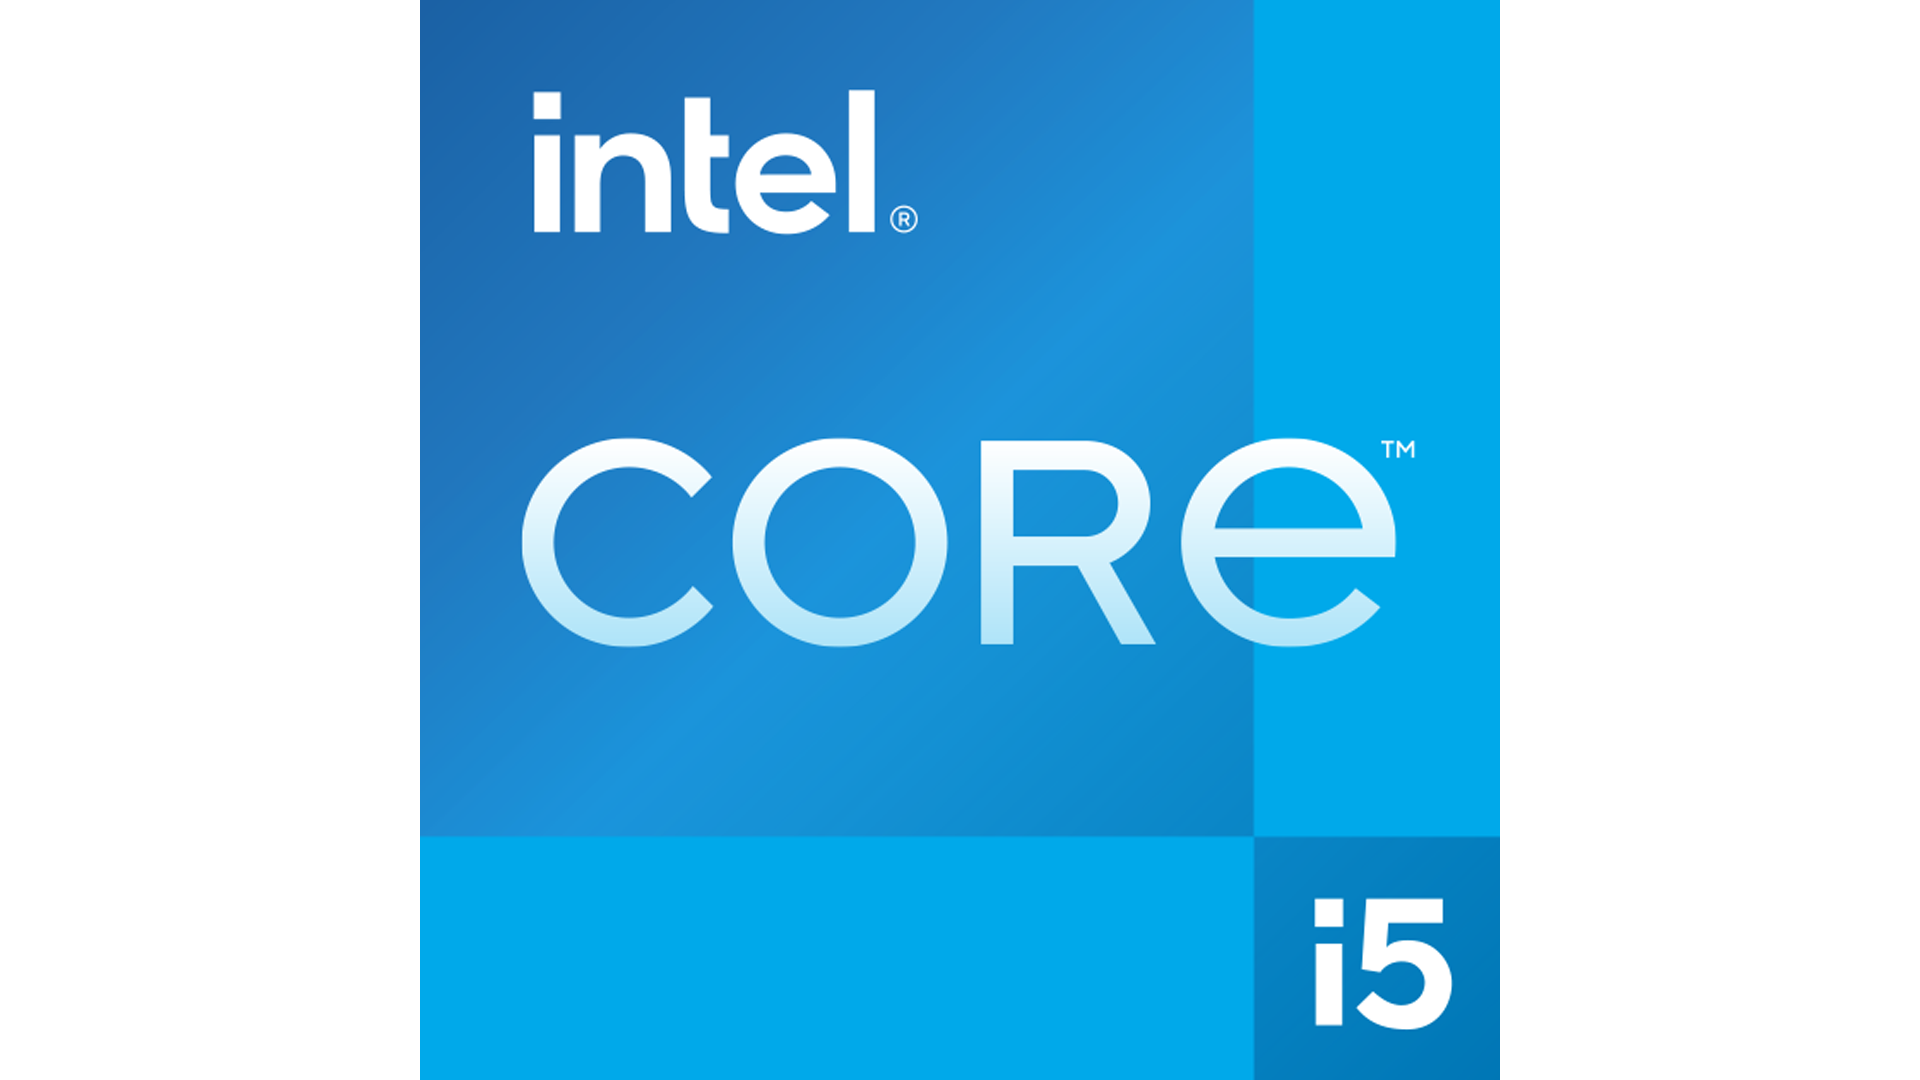 Intel® Core™ i5 processor 14600K